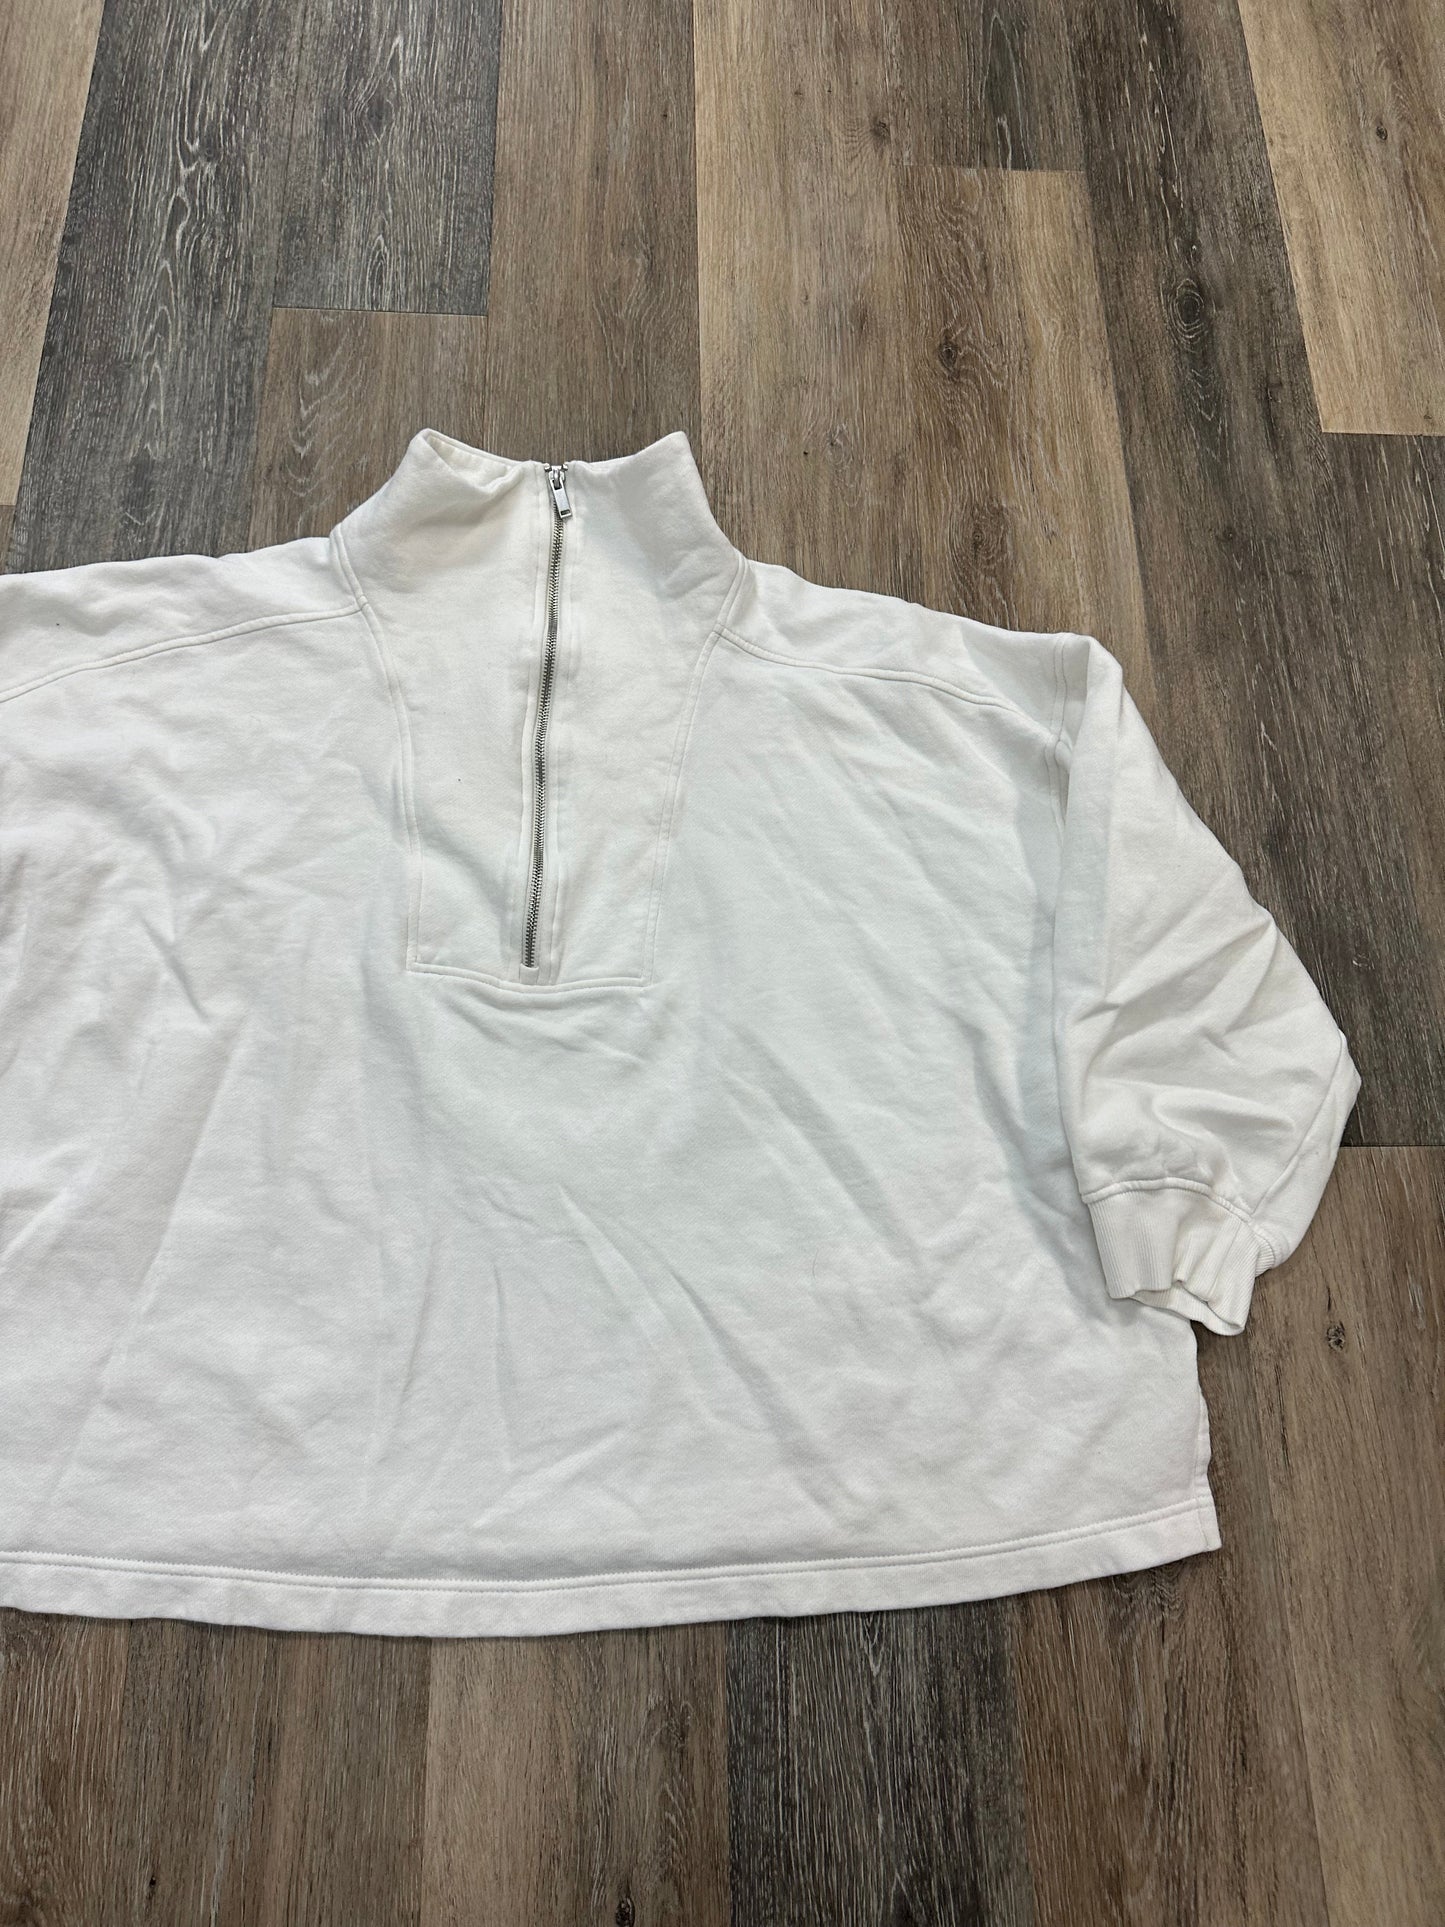 Sweatshirt Crewneck By Old Navy  Size: 3x